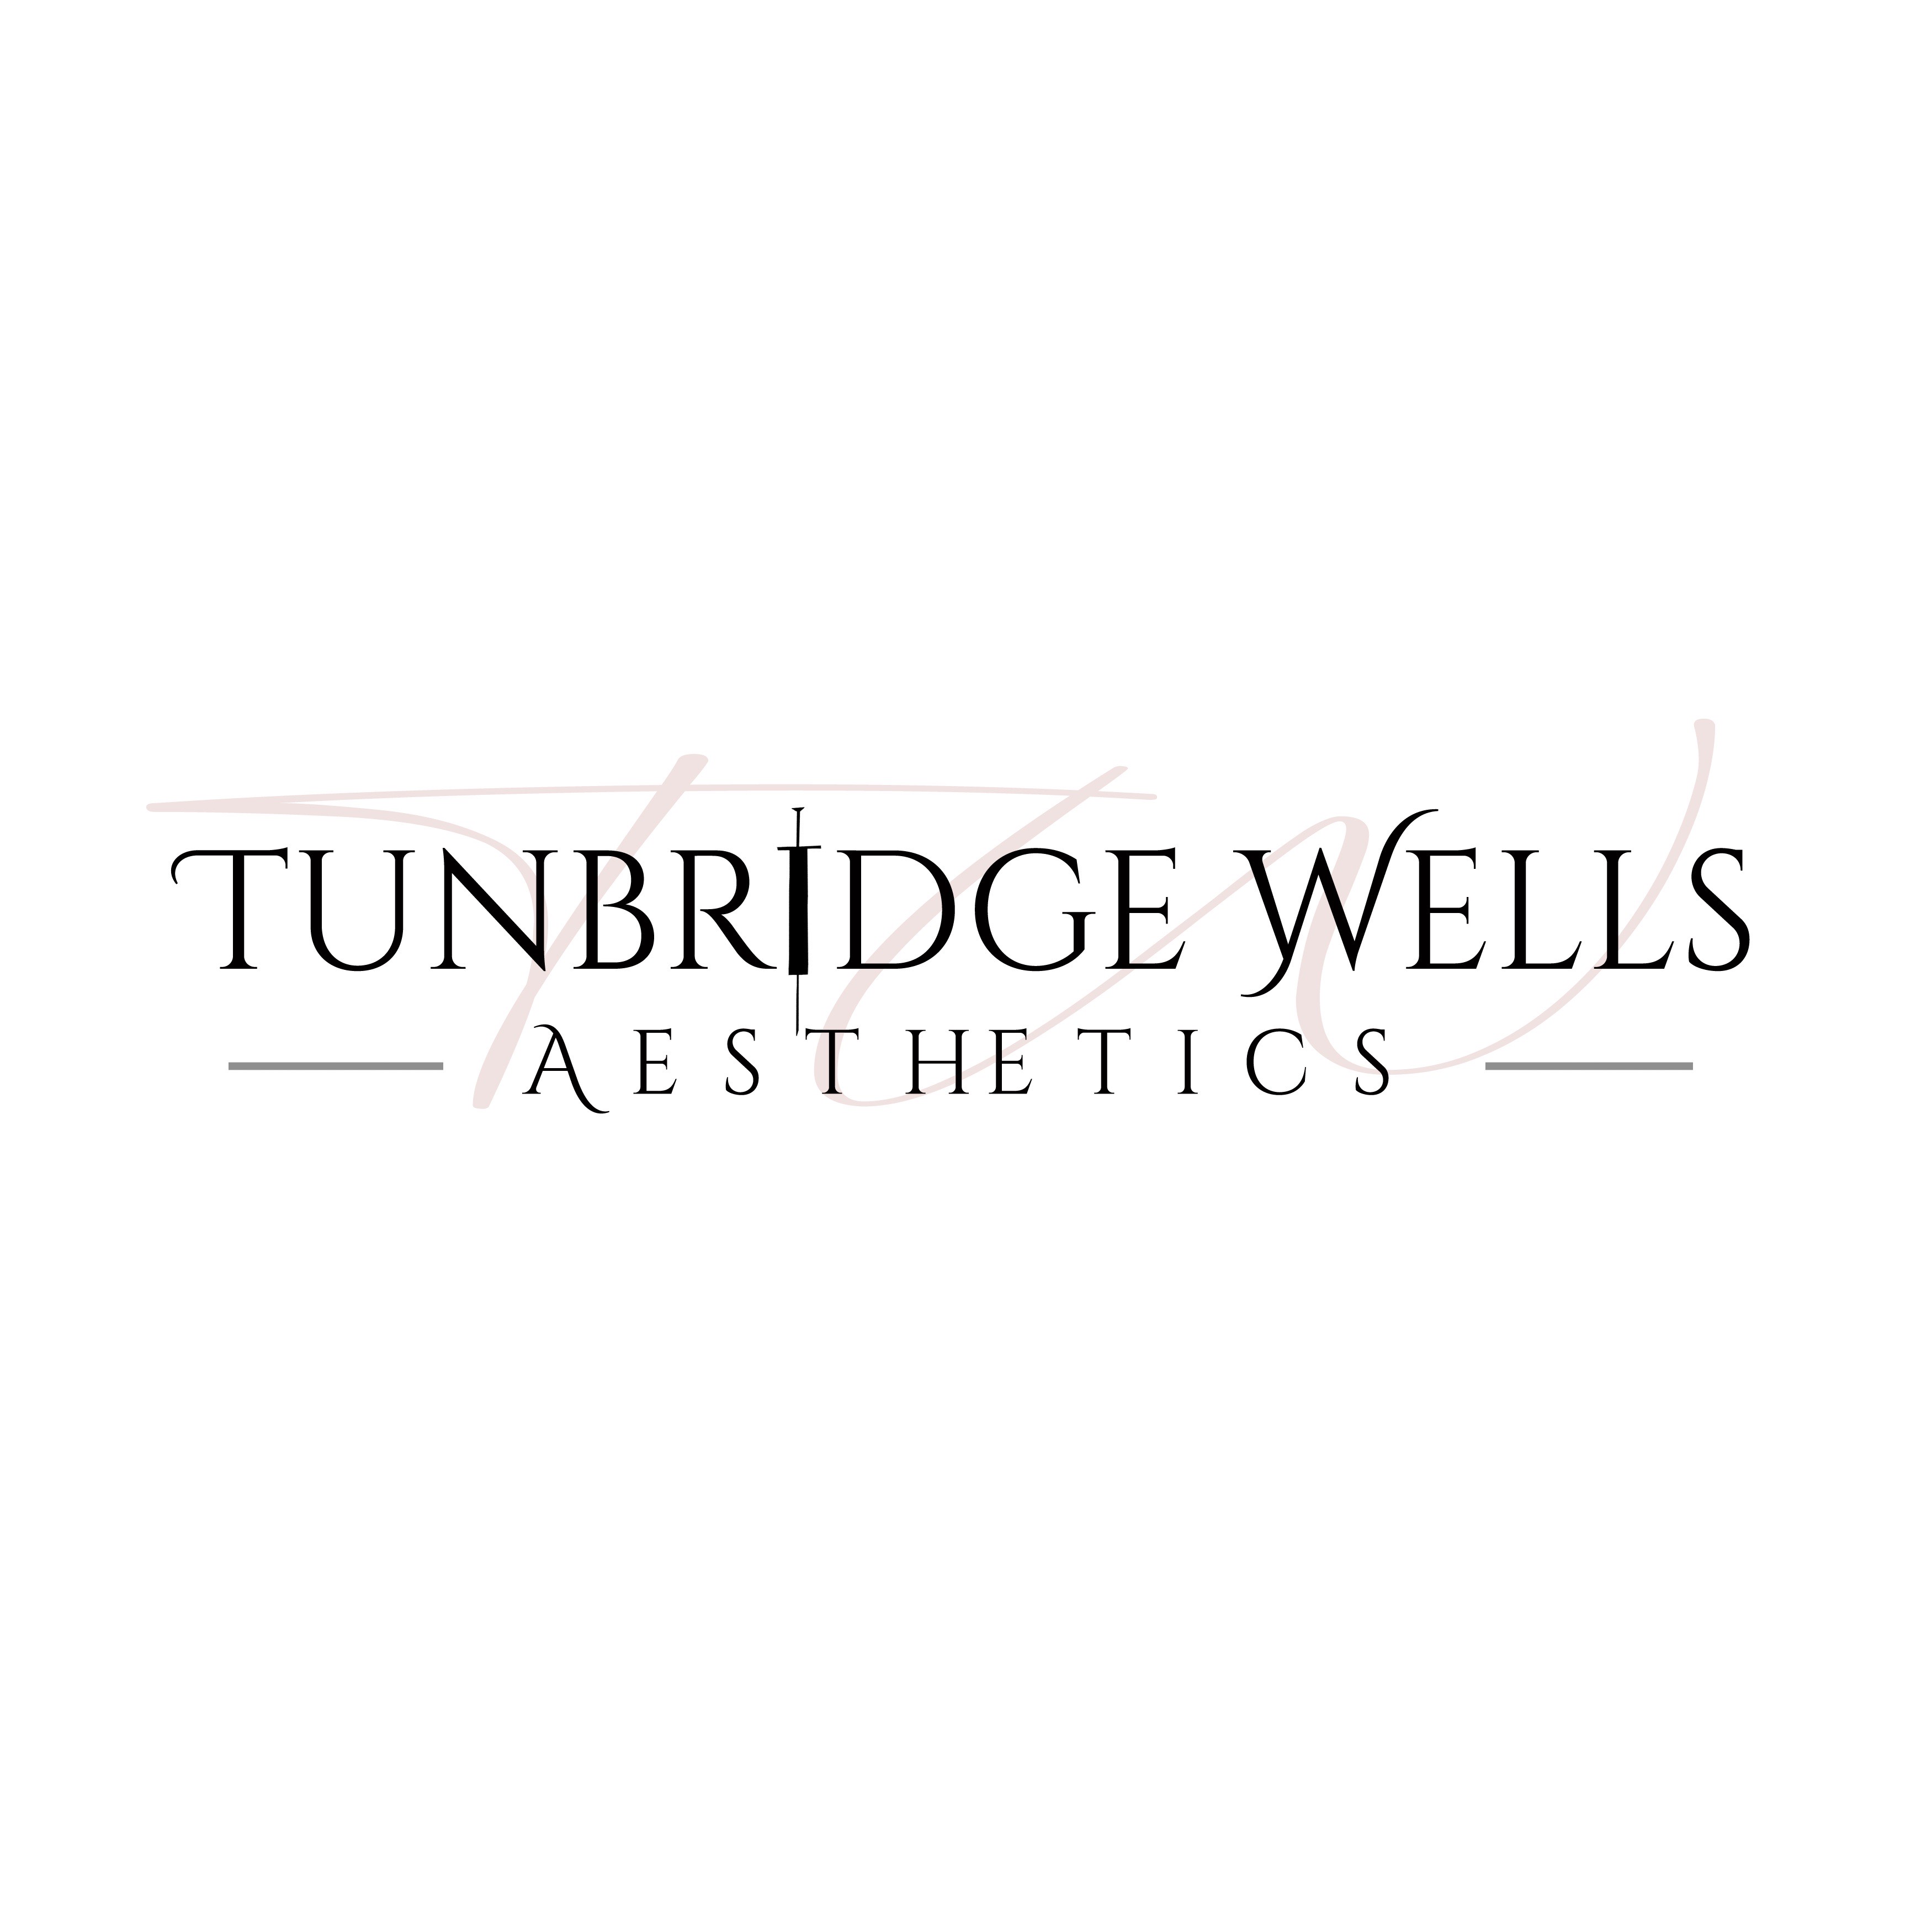 TUNBRIDGE WELLS AESTHETICS logo